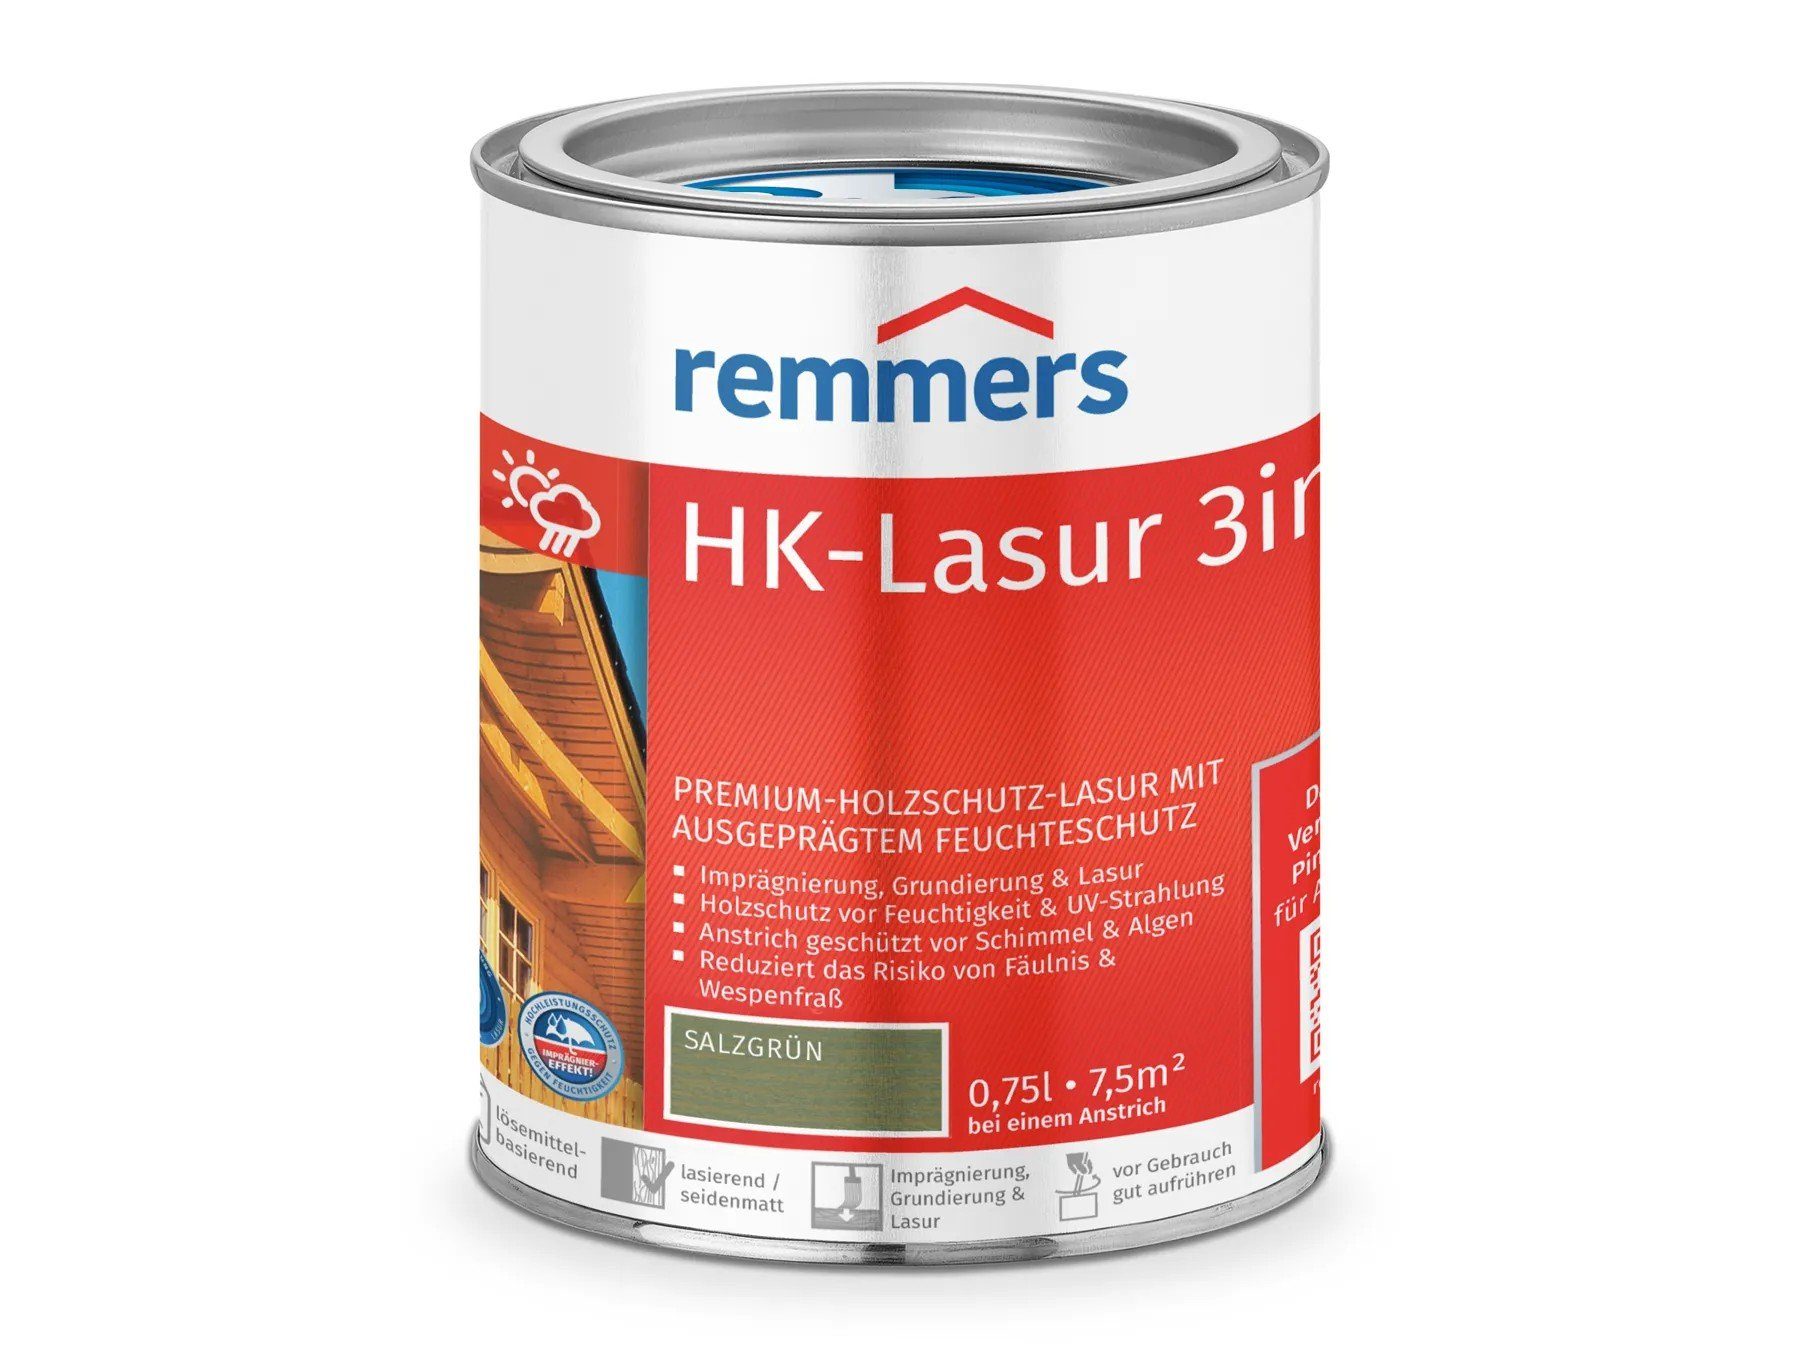 salzgrün 3in1 (RC-965) Holzschutzlasur Remmers HK-Lasur